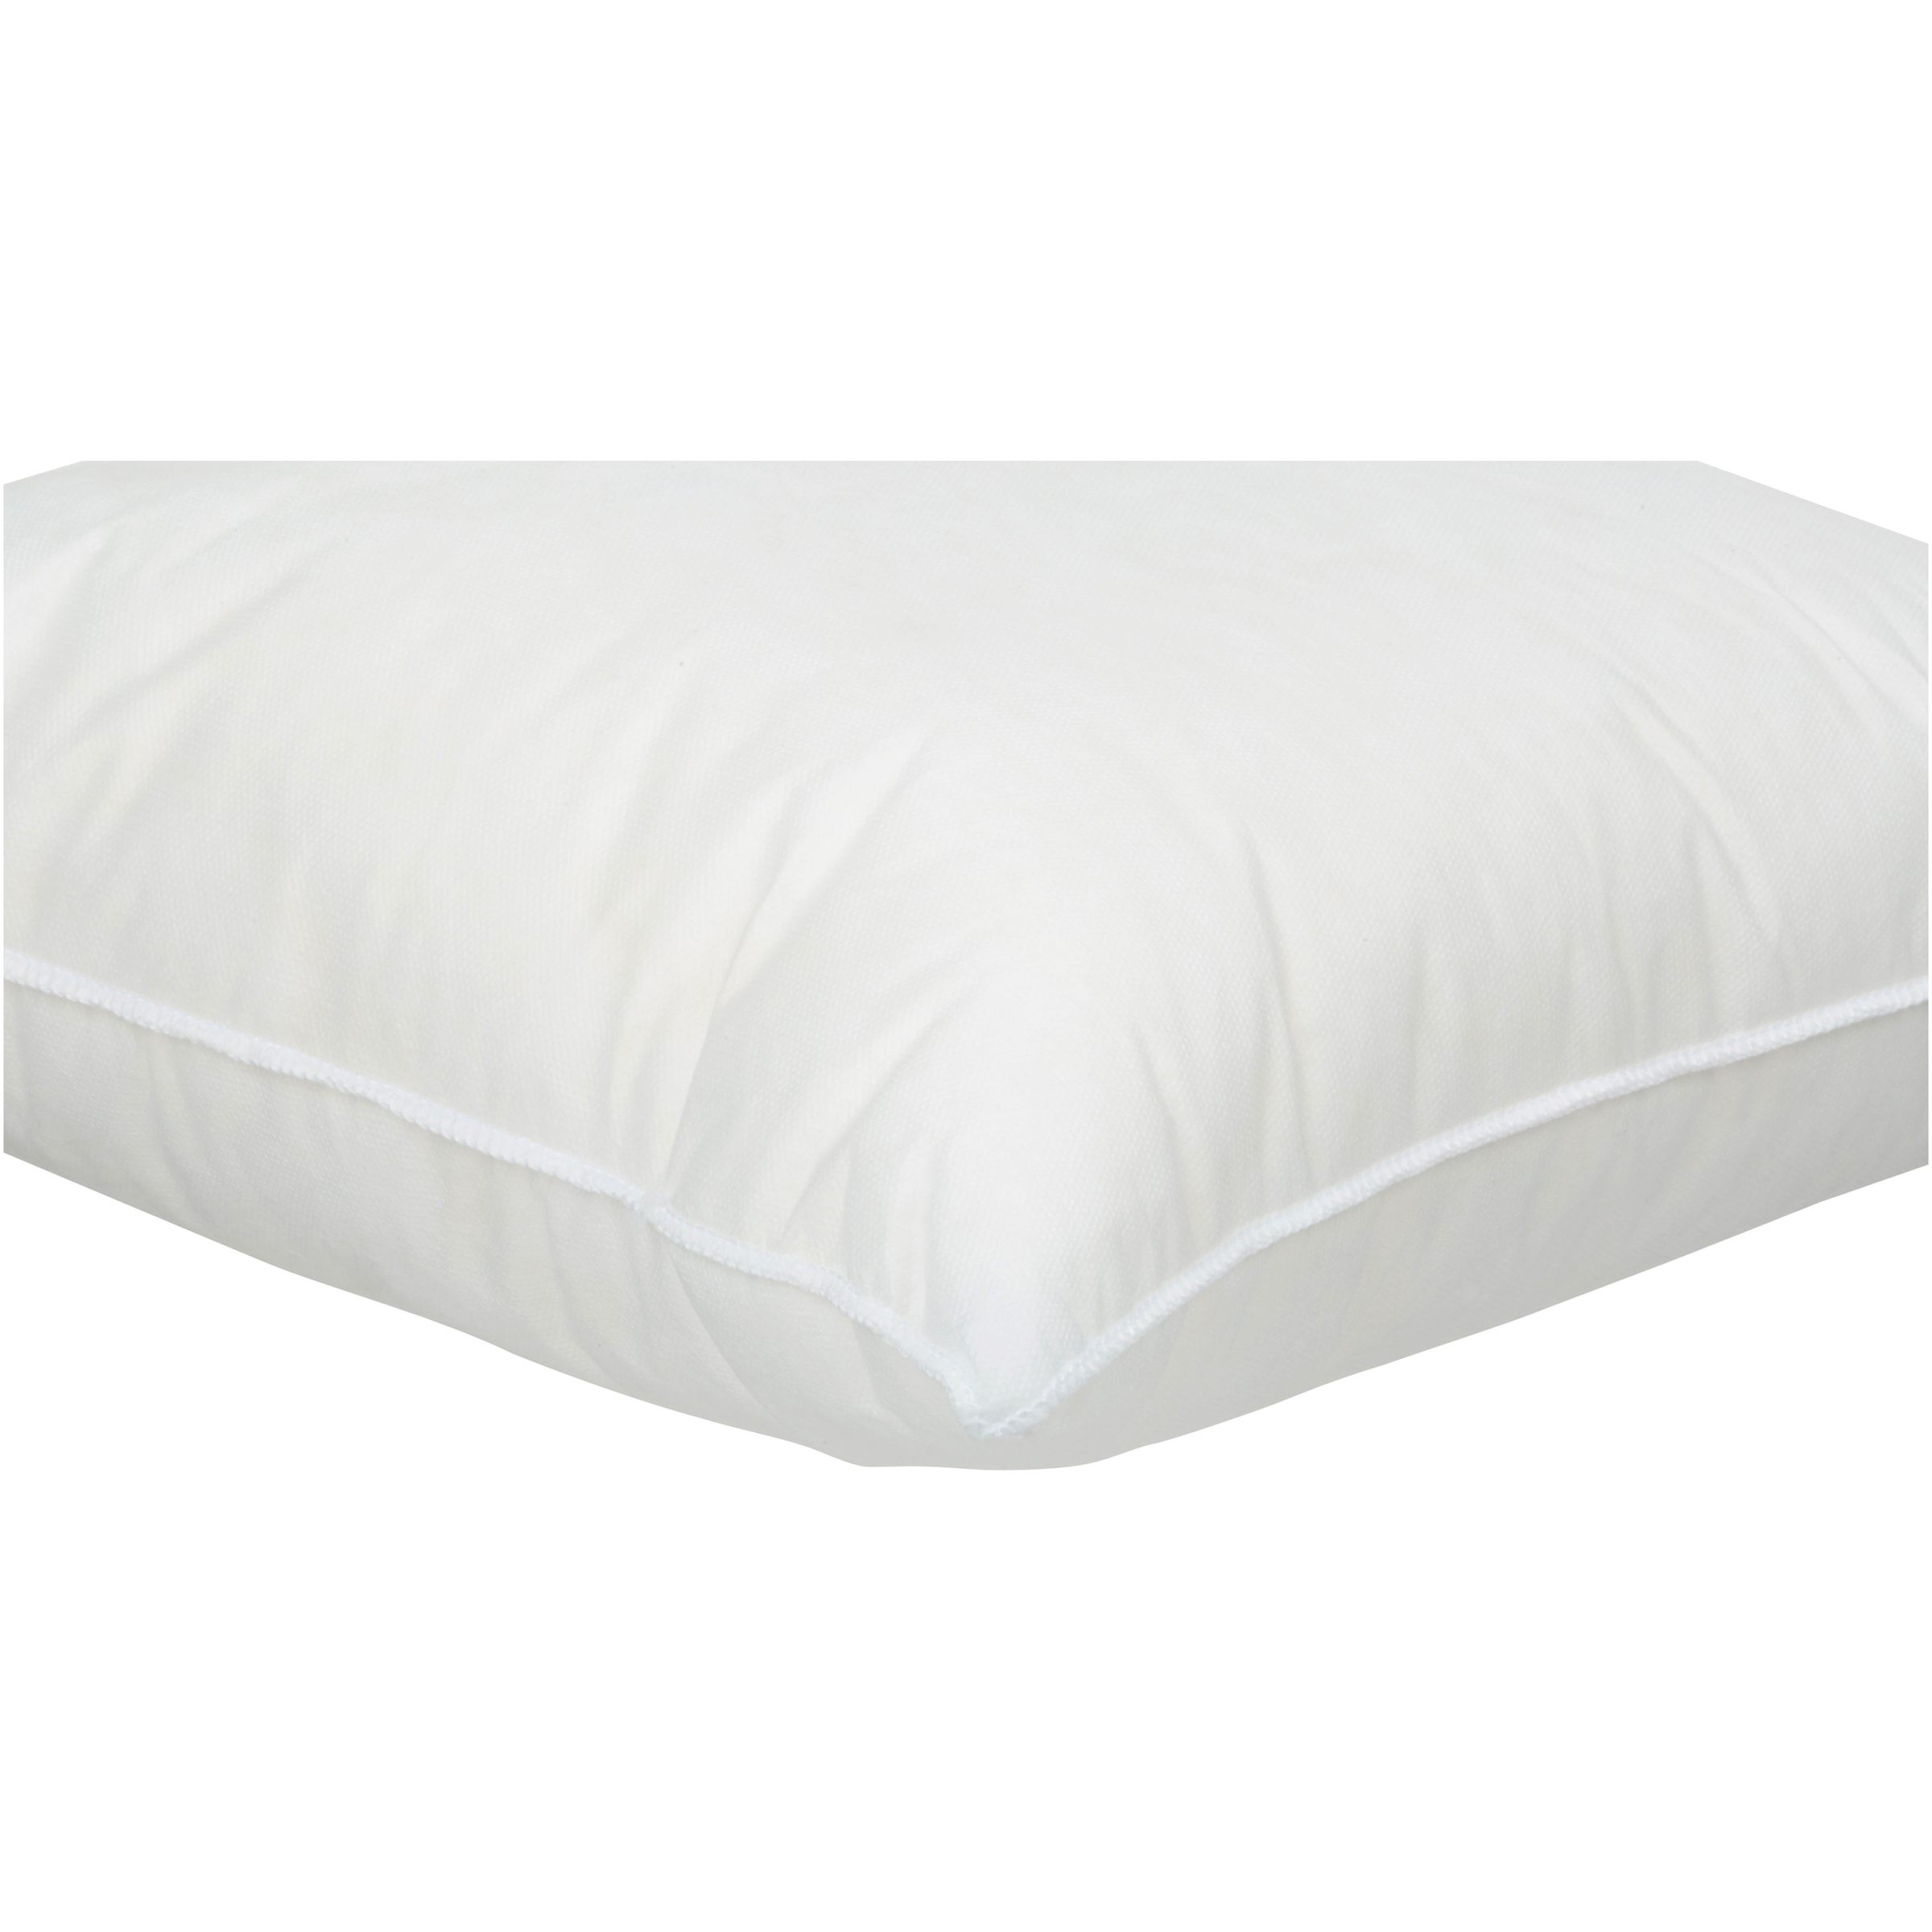 Pellon Decorative Pillow Inserts, White. 16" x 16" Square. 2 Pack Precut Polyester Fill - image 2 of 4